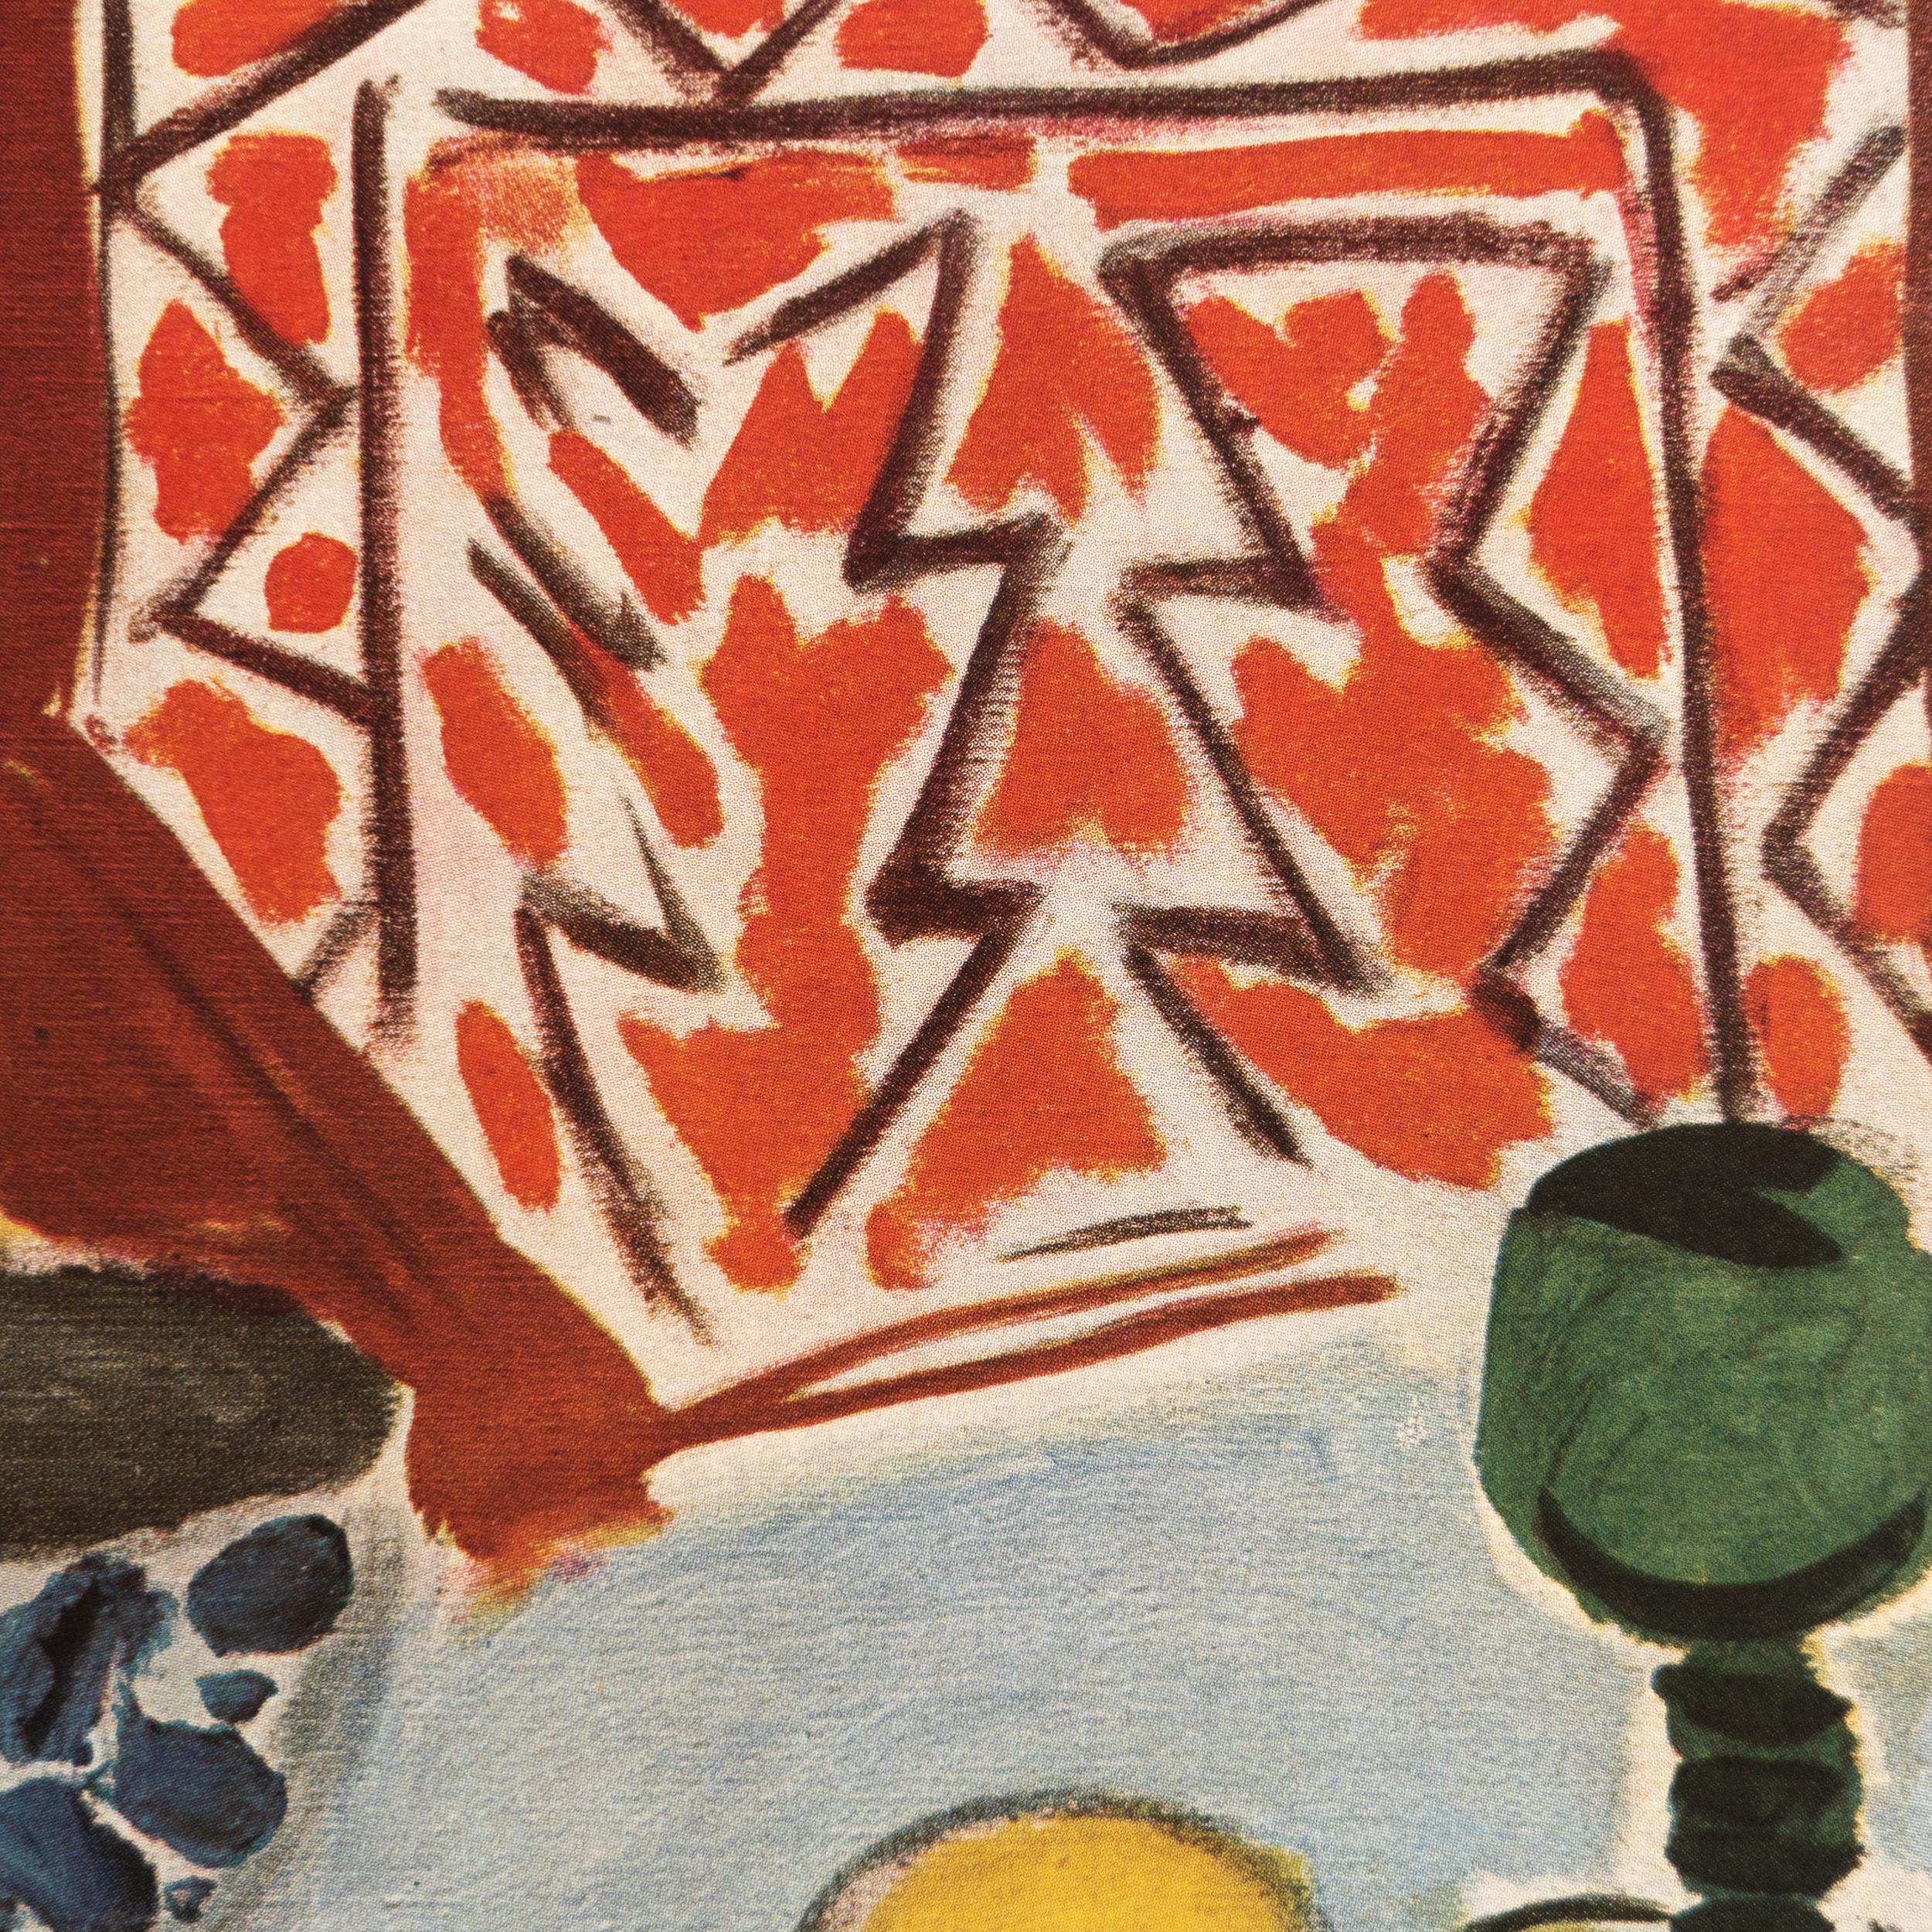 Rare Henri Matisse Lithograph, Editions du Chene, 1943 For Sale 2